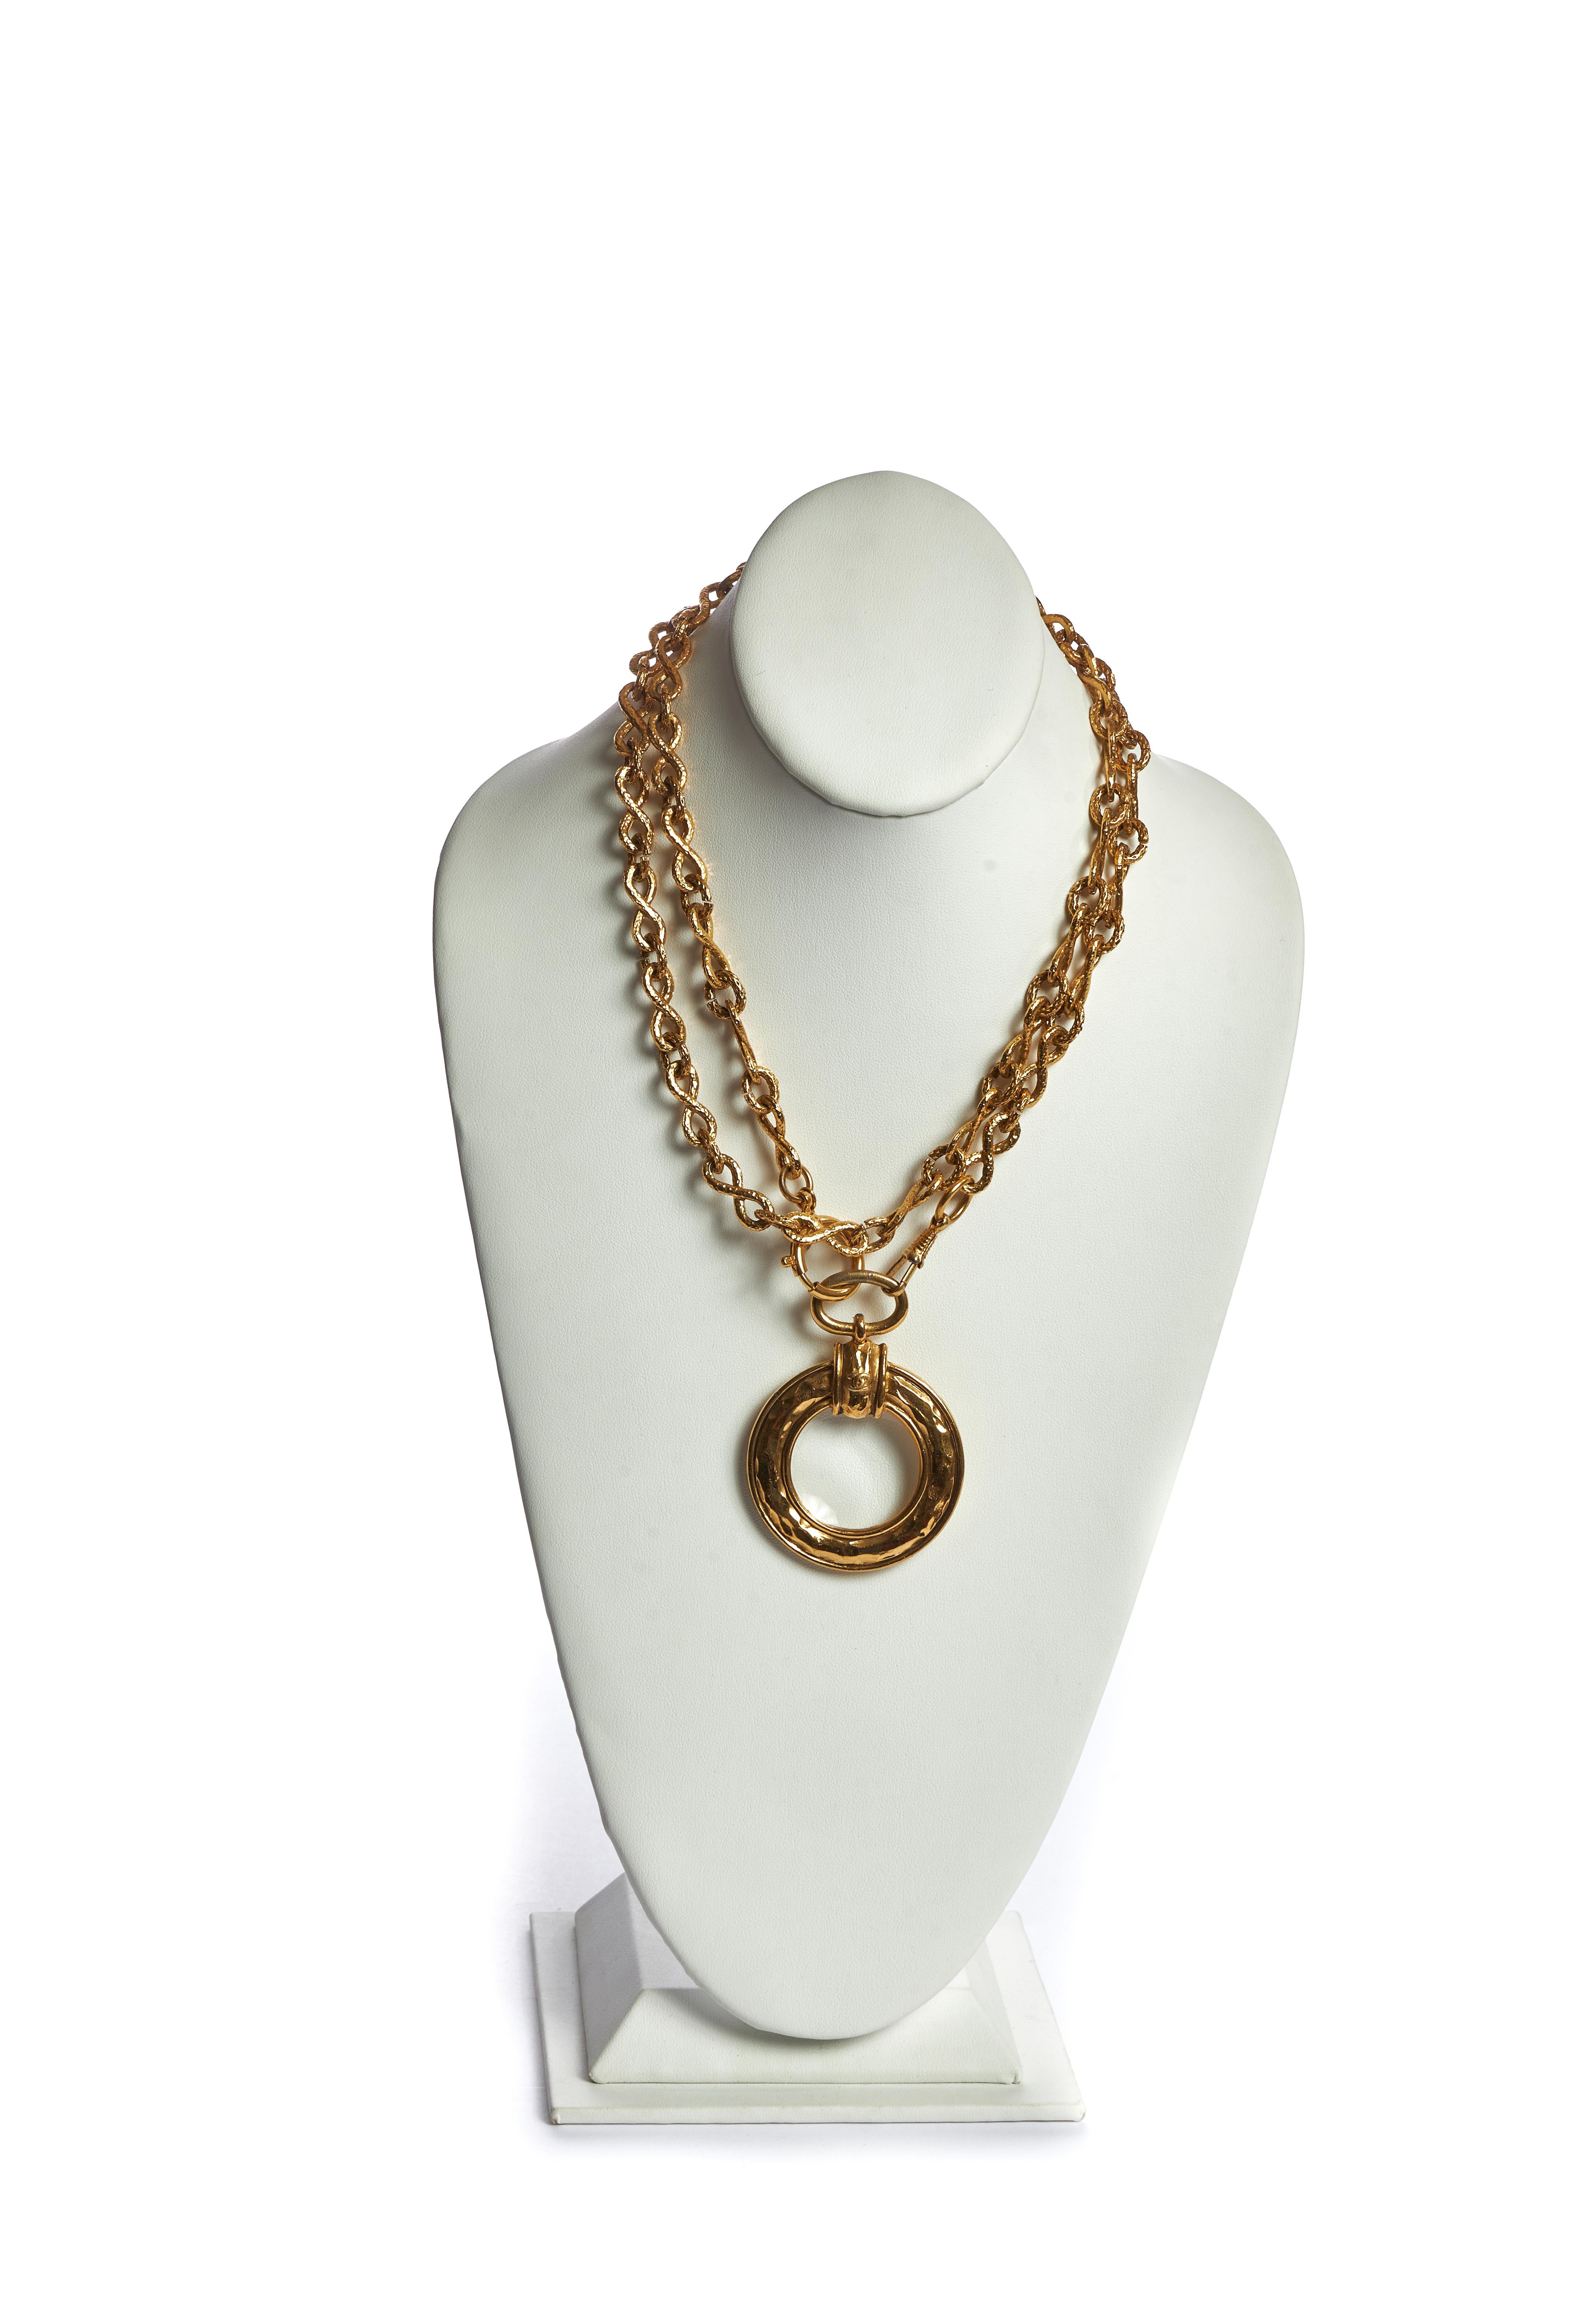 1980s Vintage Chanel Hammered Magnifier Necklace For Sale